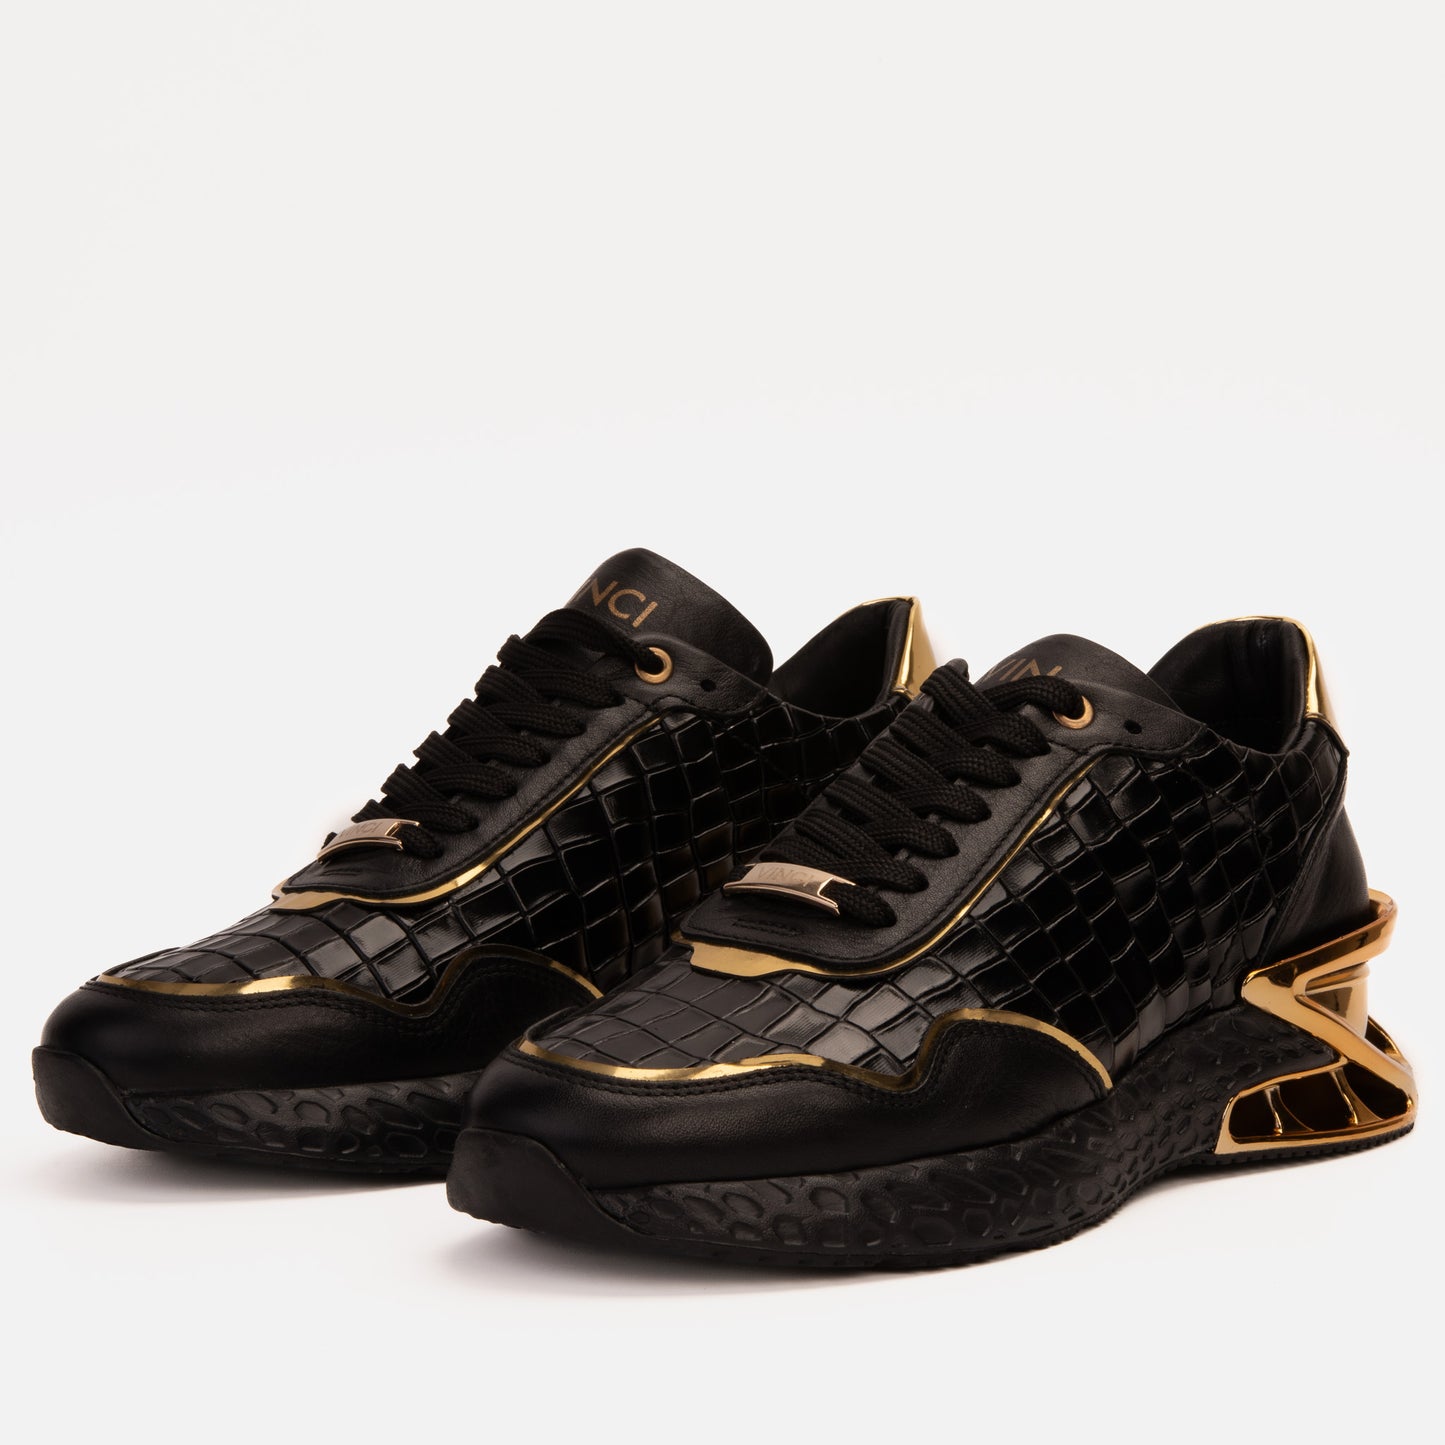 The Bellagio Black & Gold Leather Men Sneaker